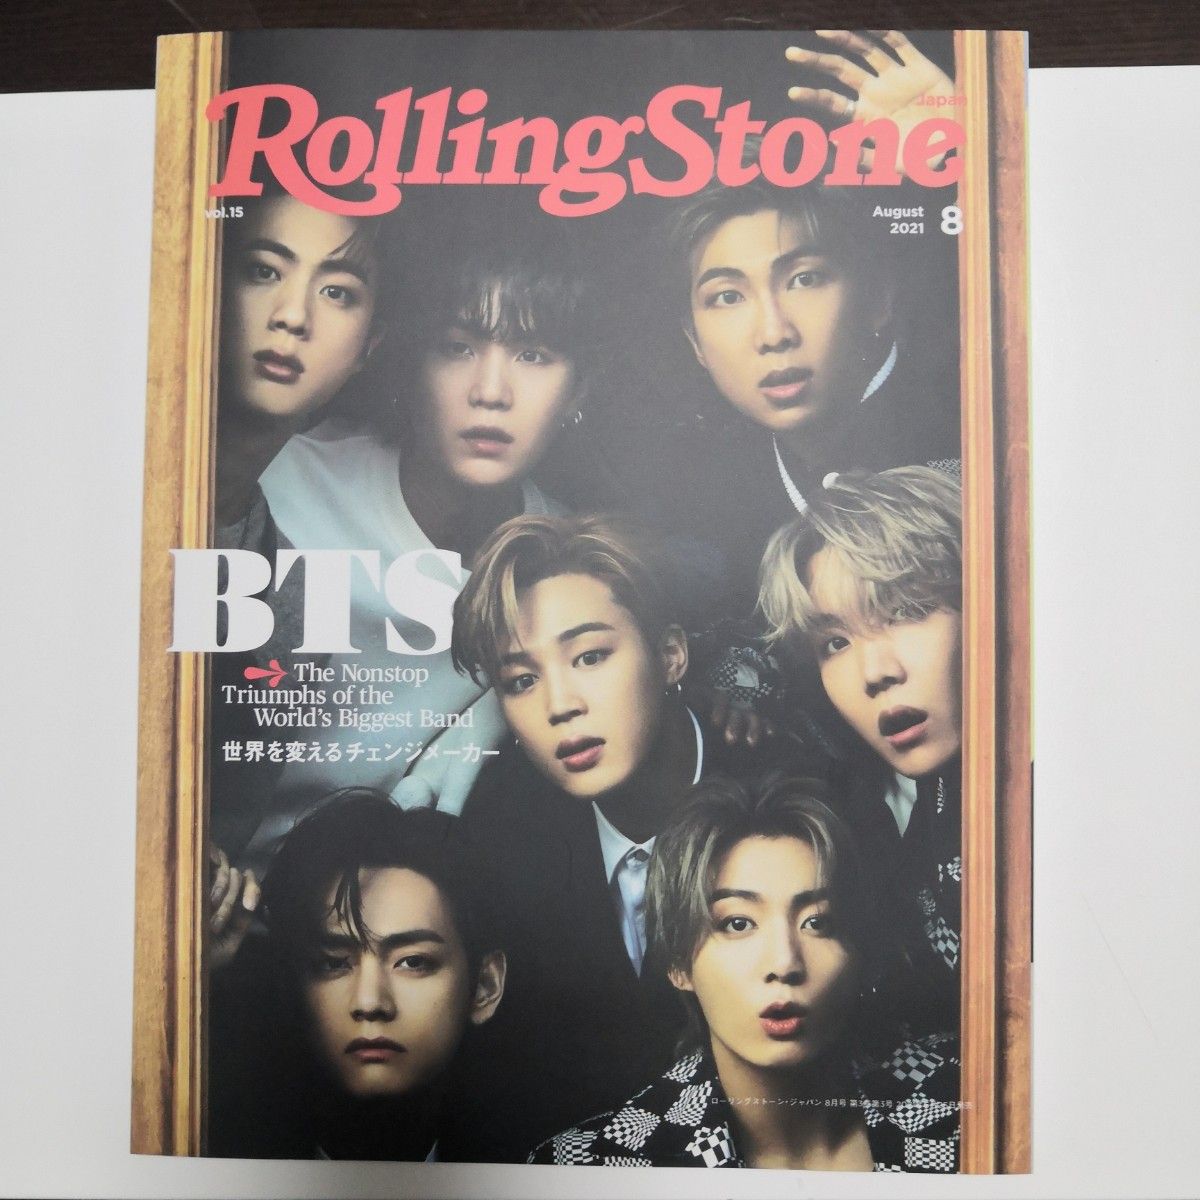  Rolling Stone  BTS  日本語版  雑誌